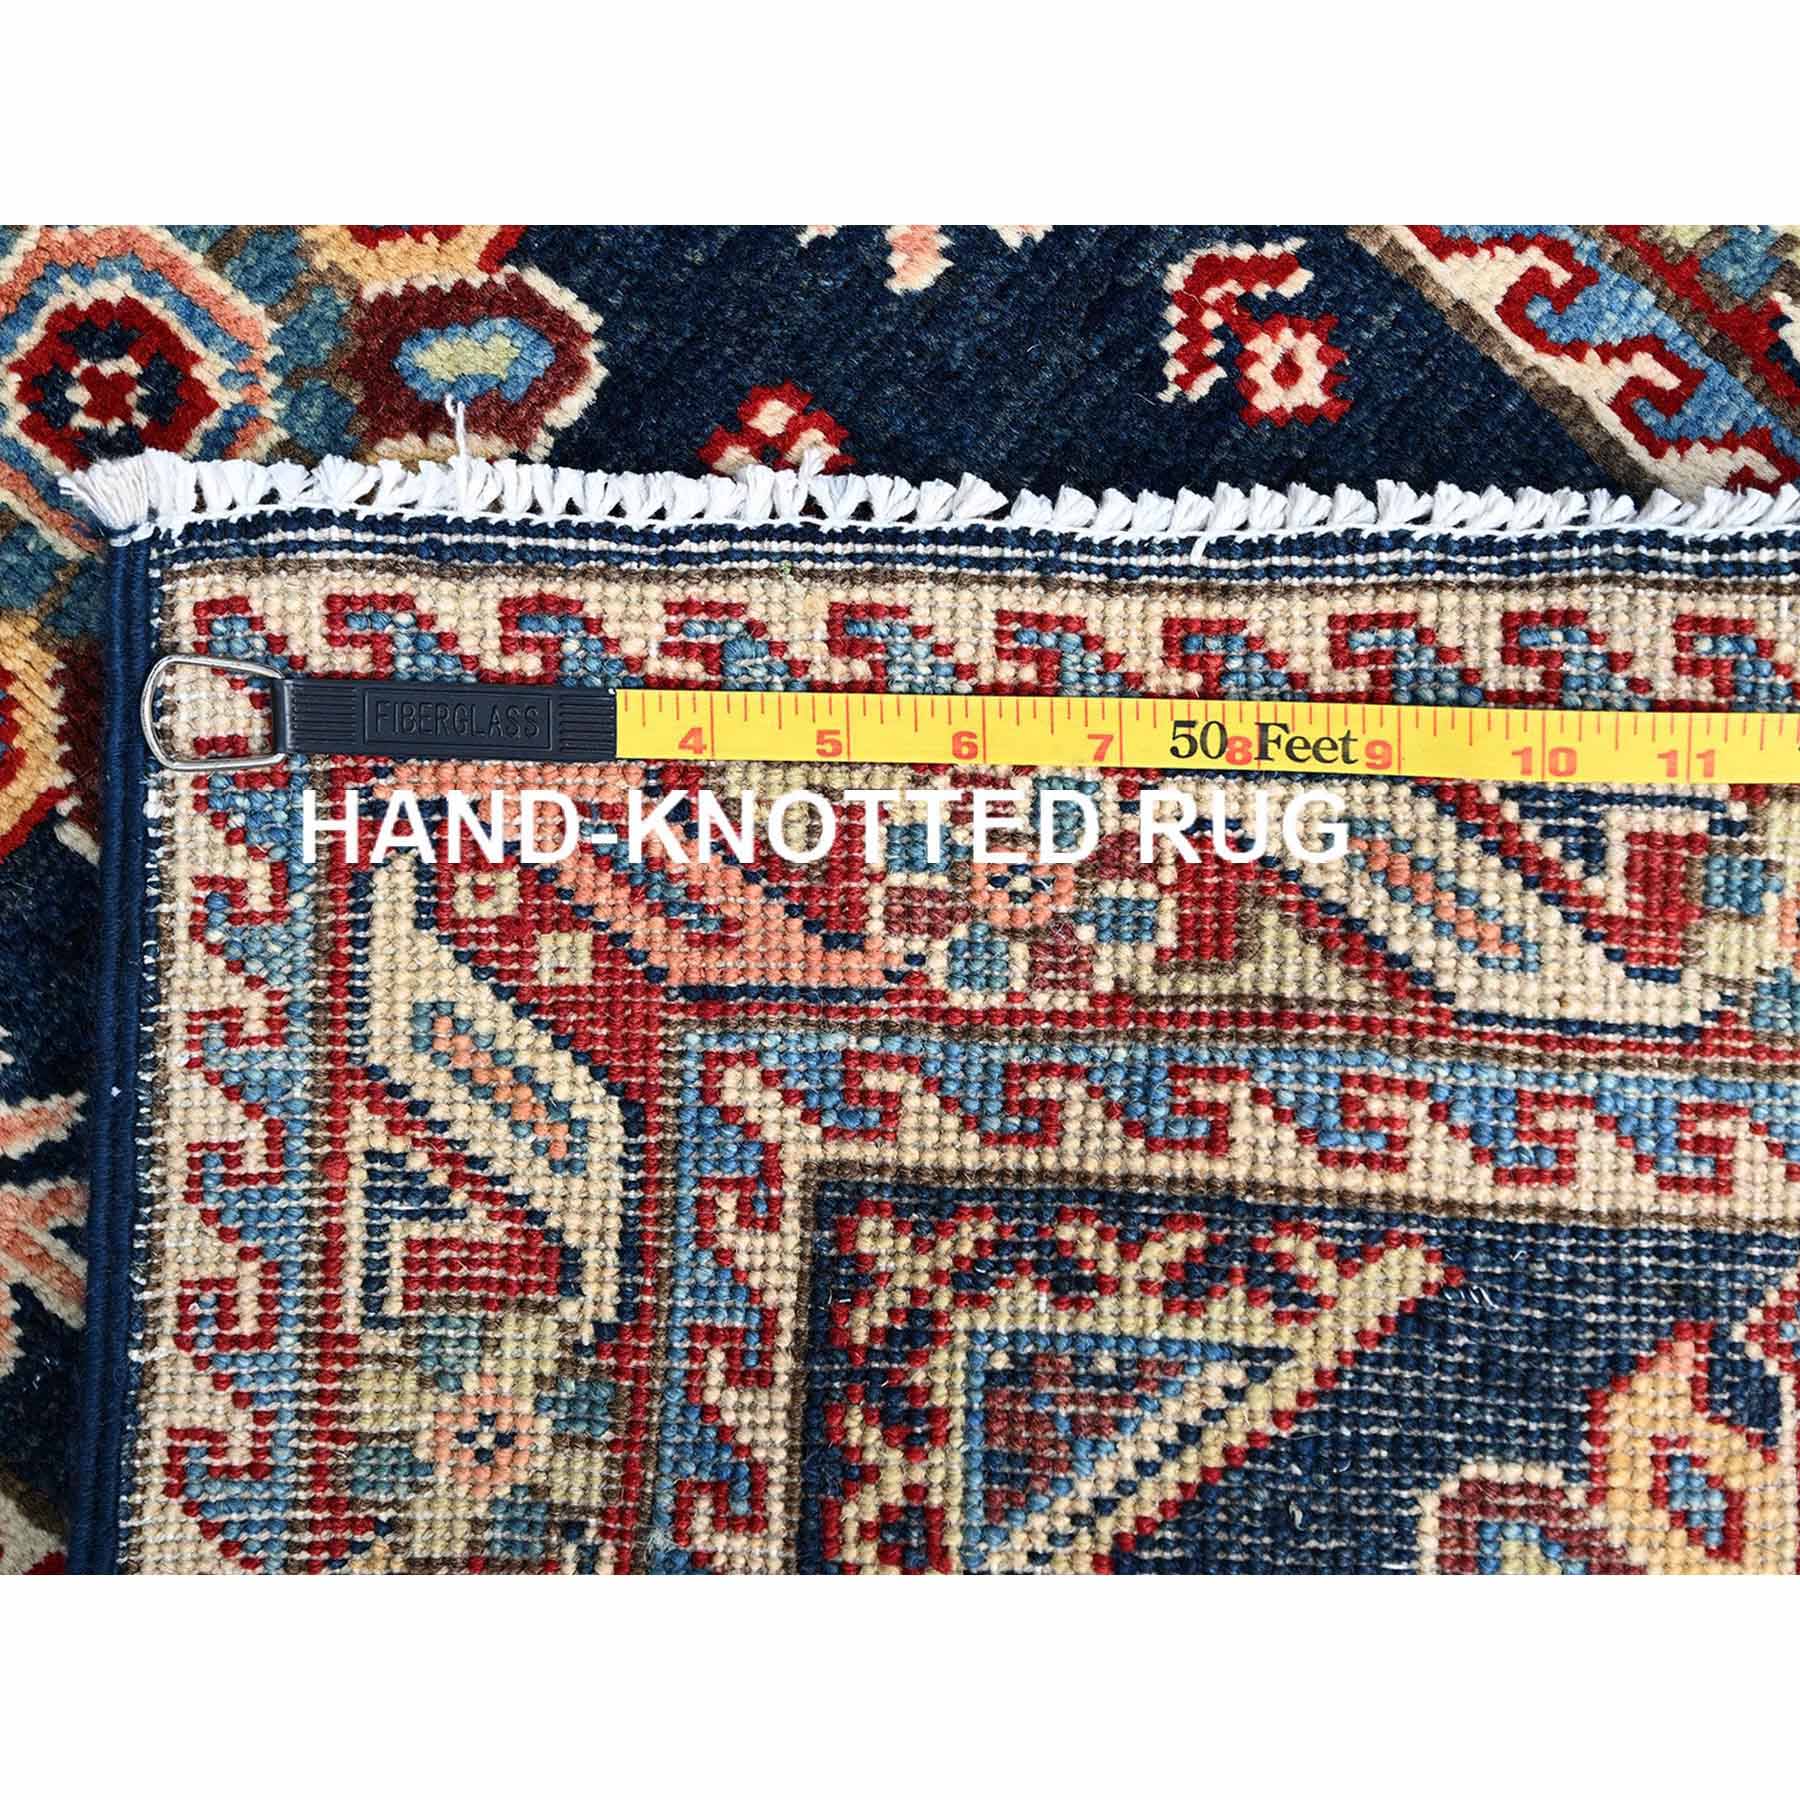 Kazak-Hand-Knotted-Rug-431195